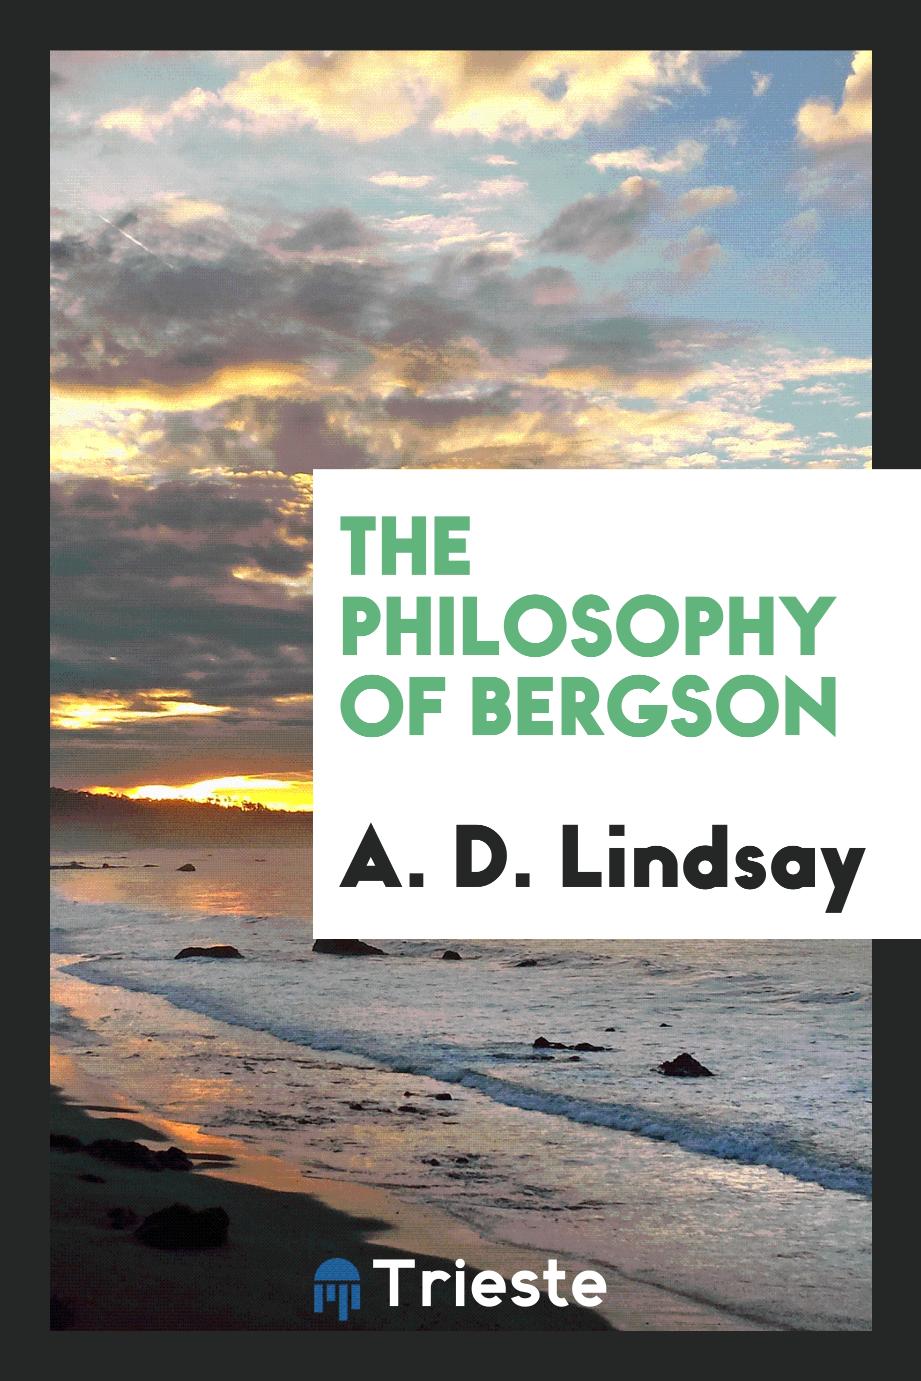 The philosophy of Bergson